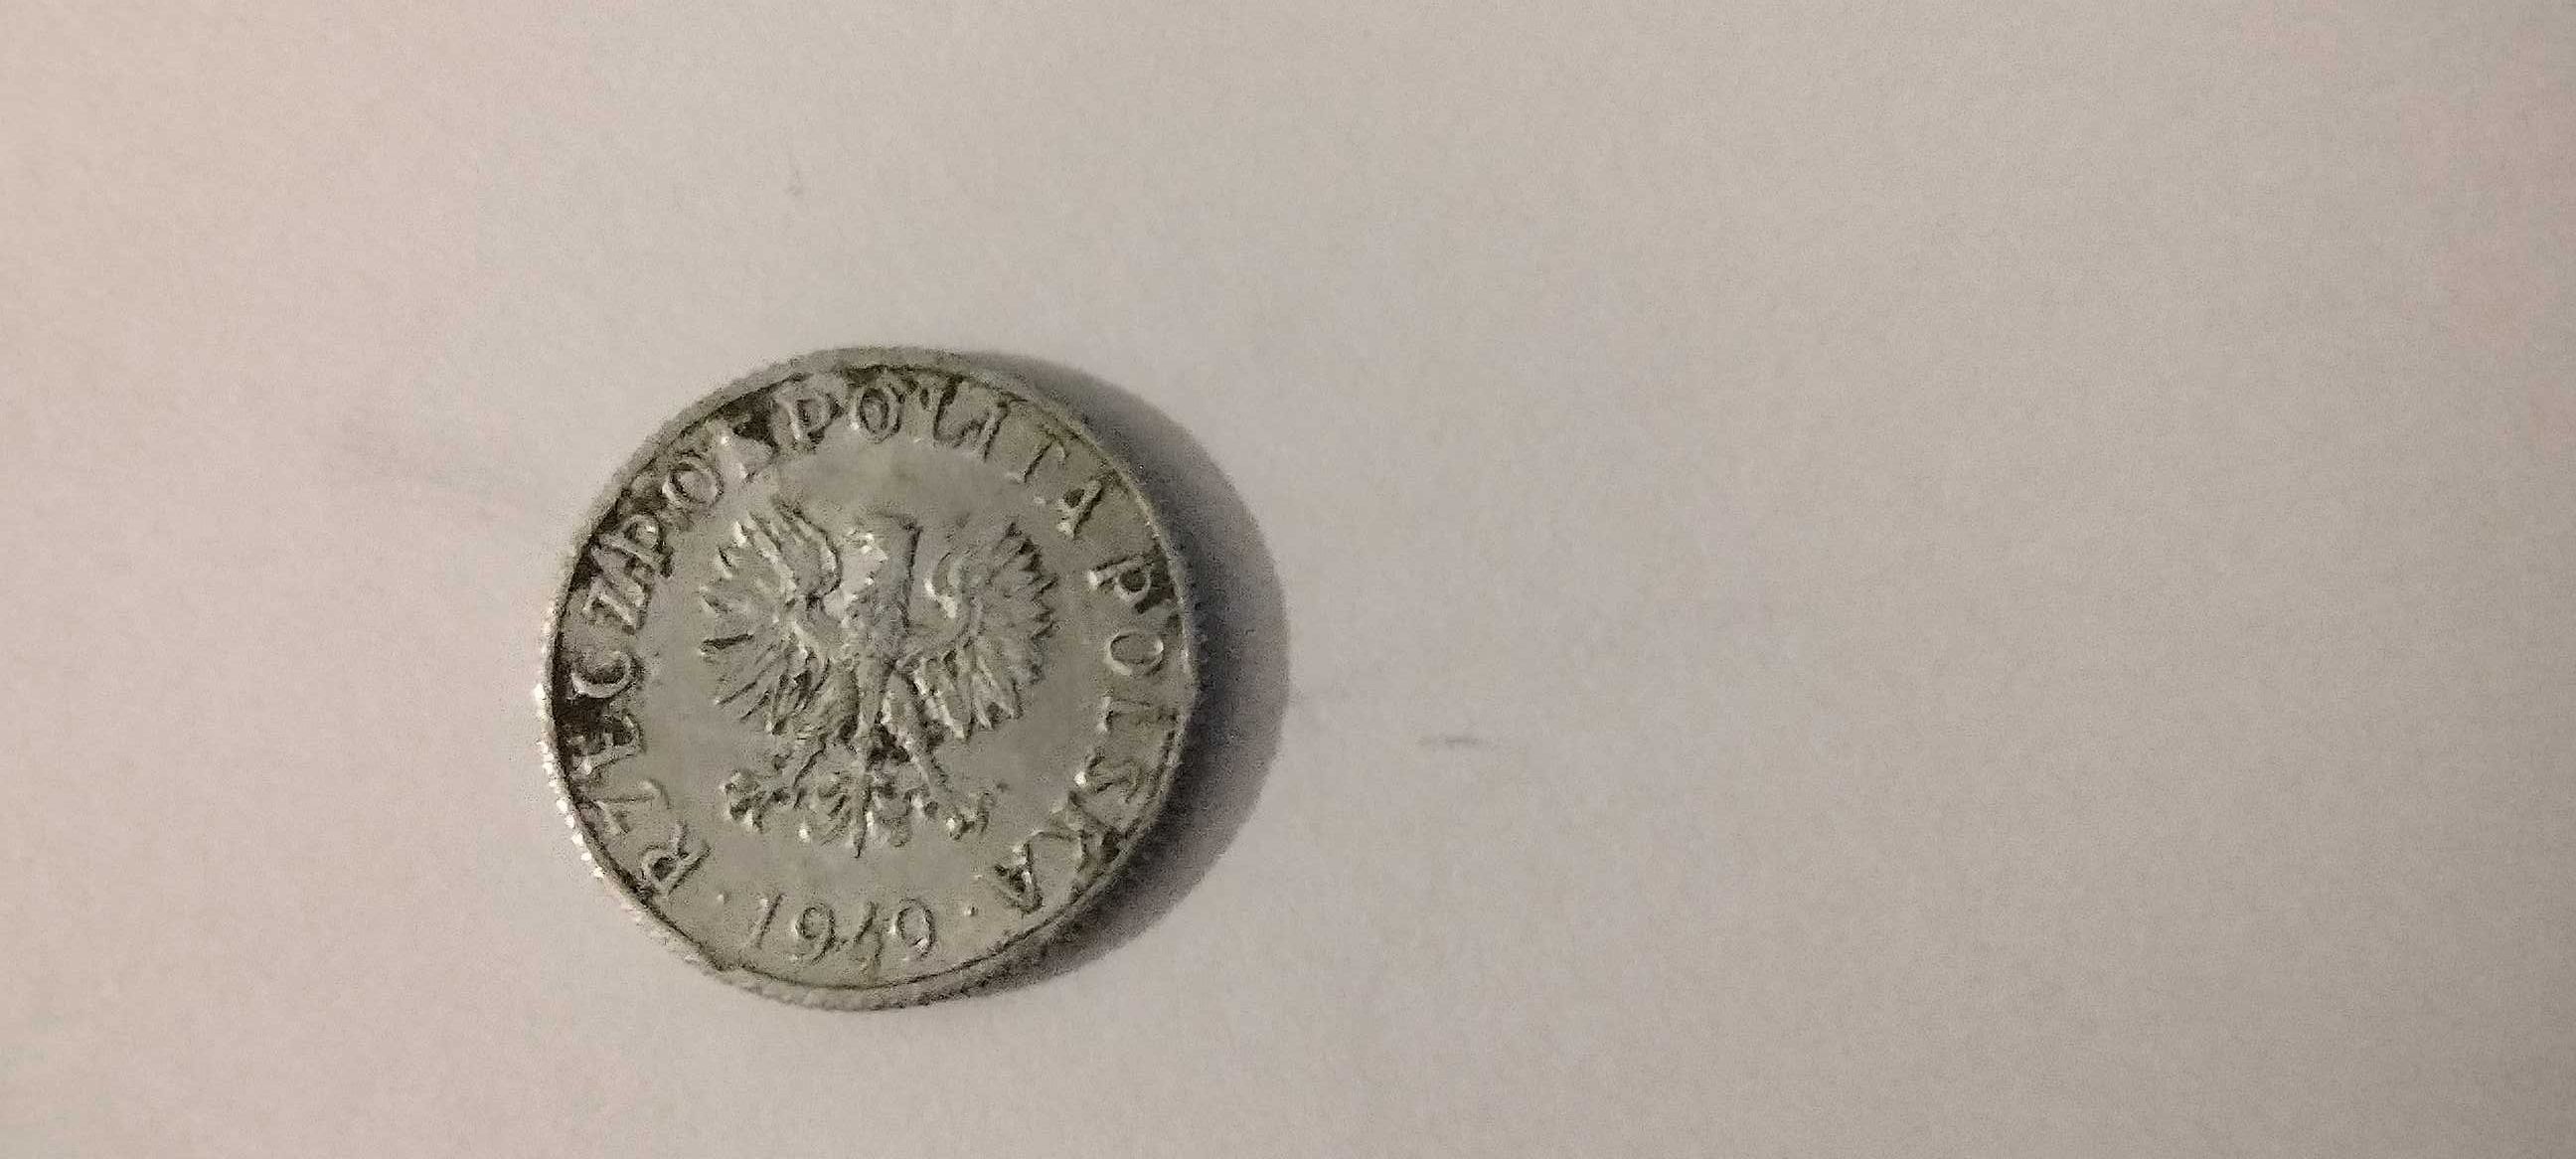 moneta polska z 1949 r 1 gr bez znaku mennicy